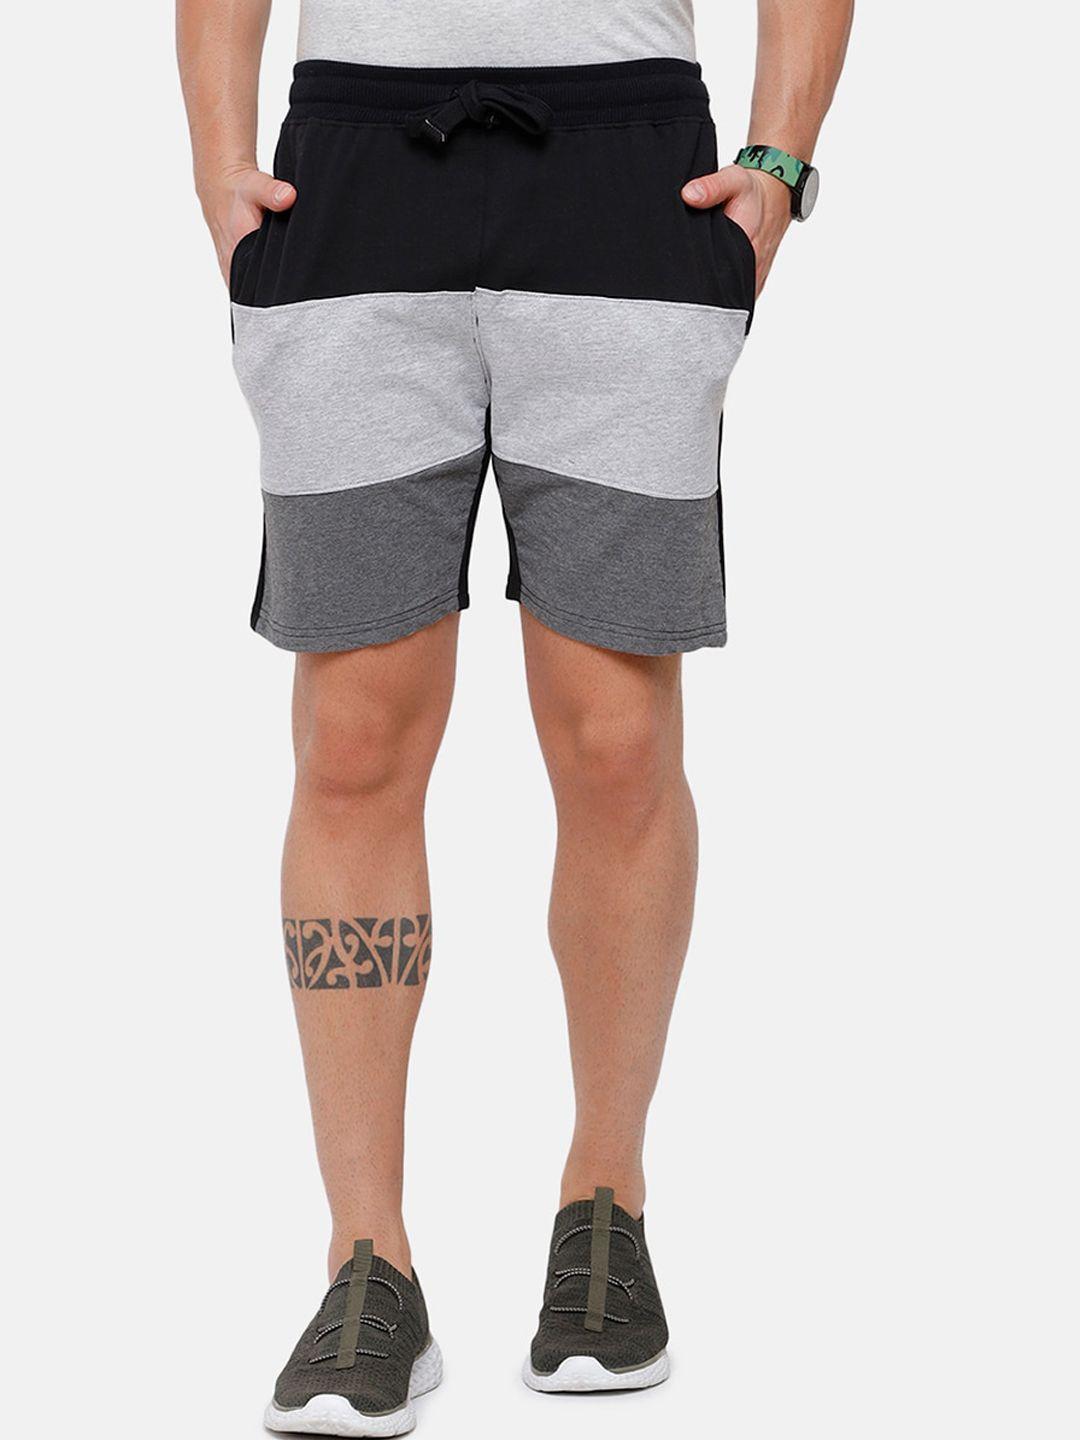 madsto-men-black-&-grey-colourblocked-slim-fit-shorts